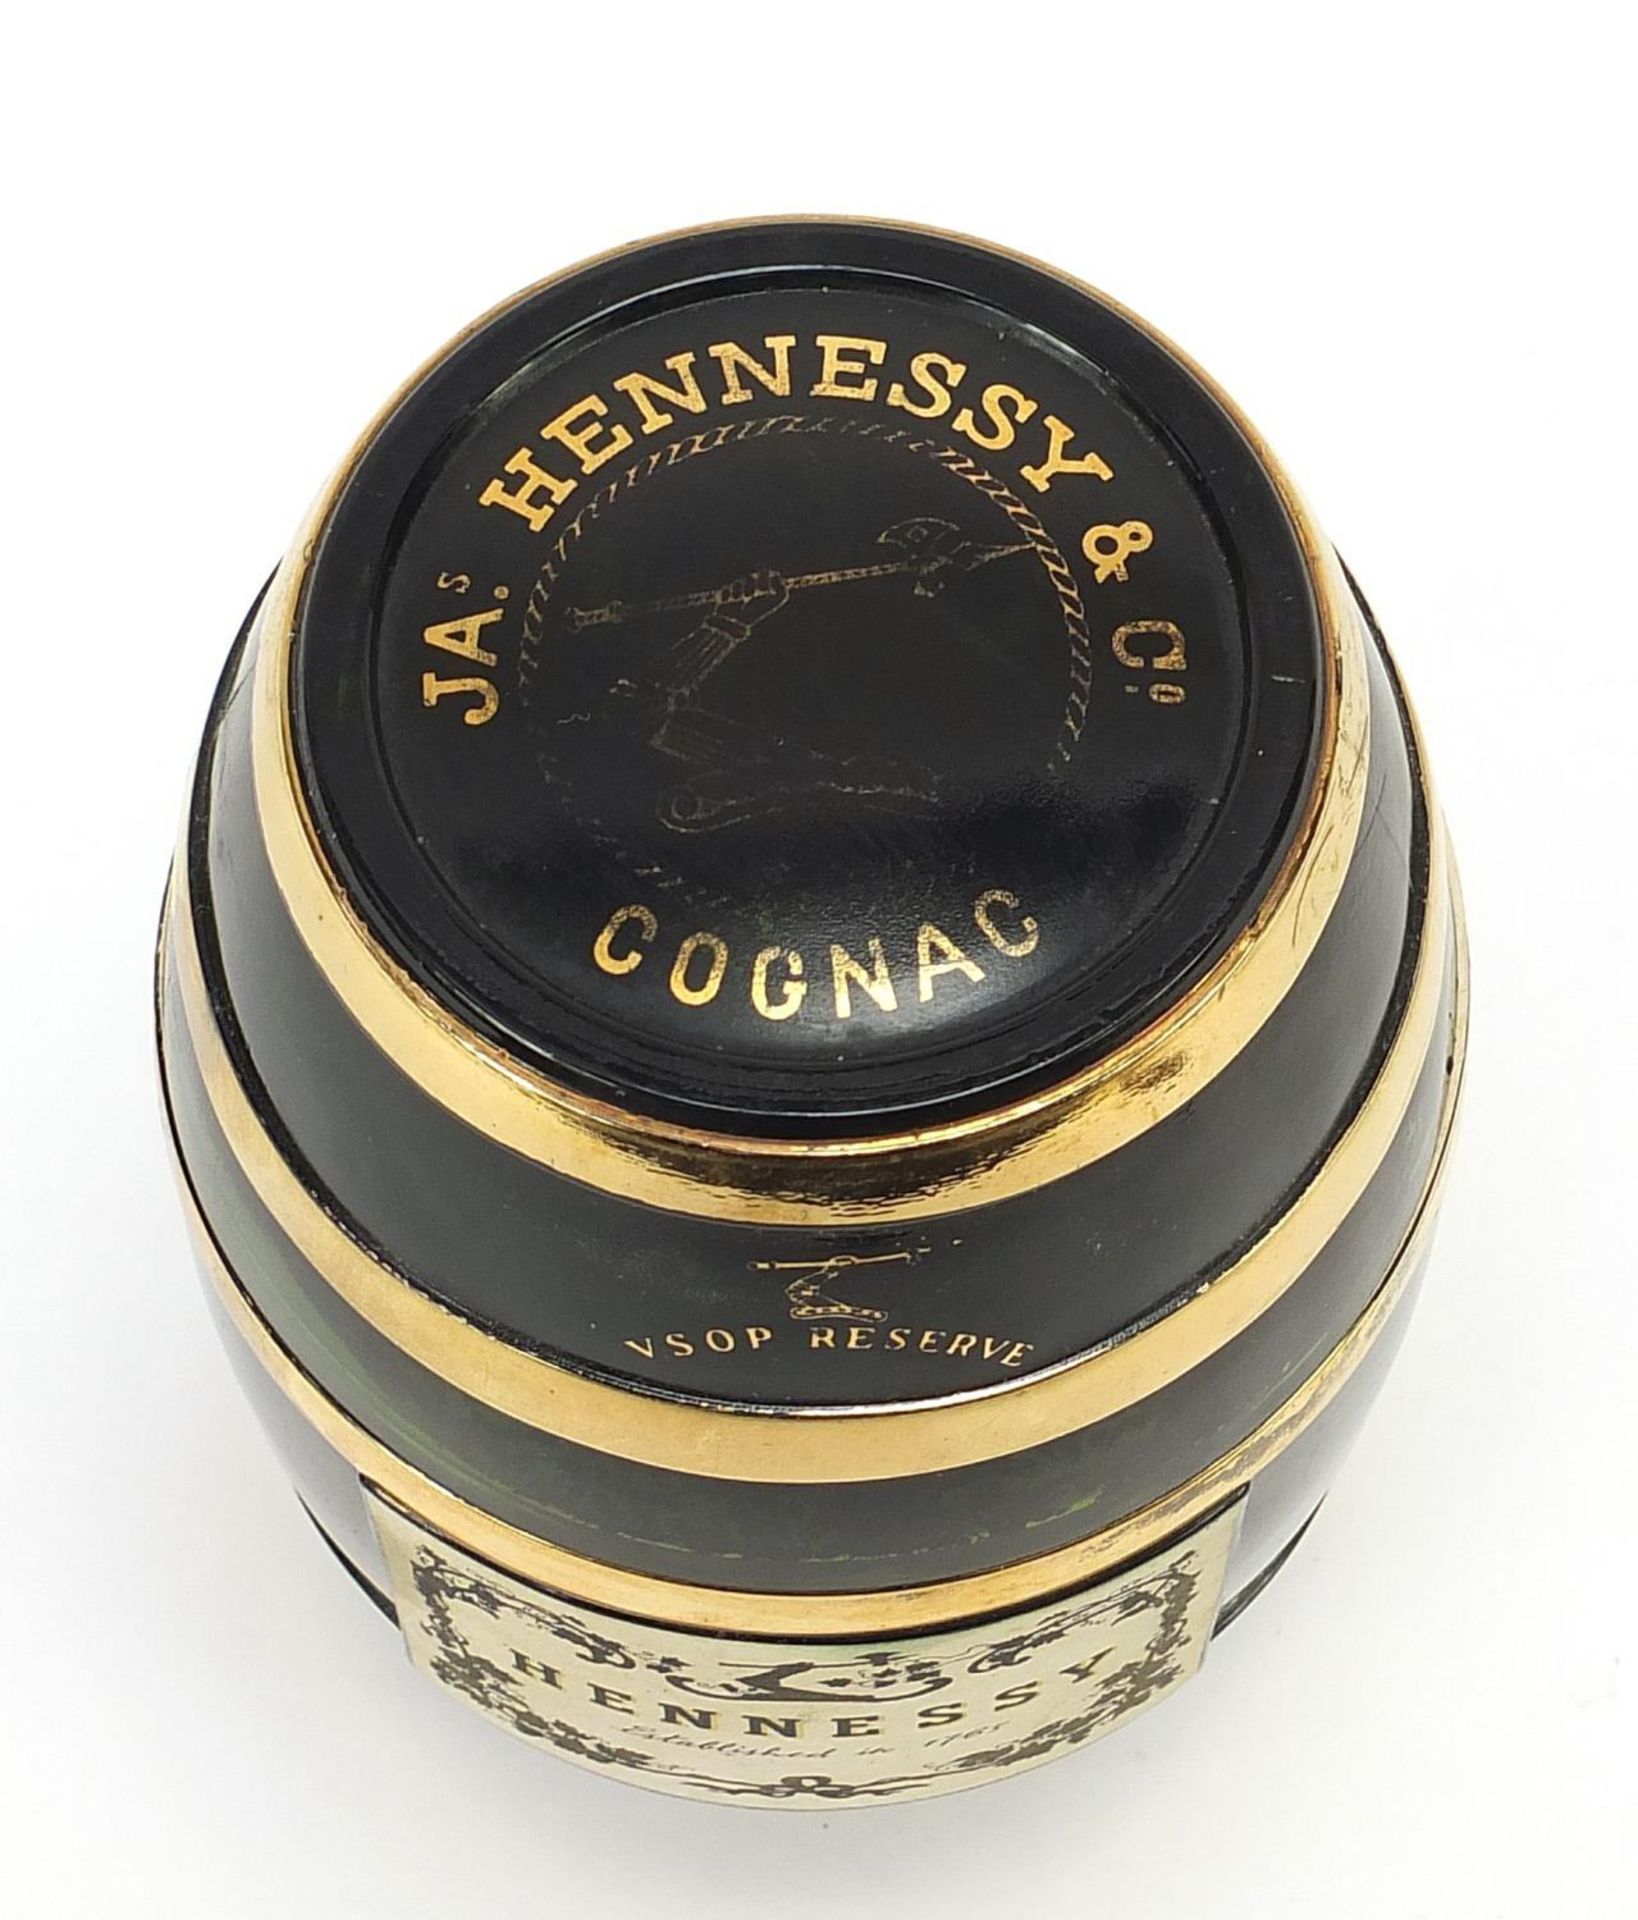 Bottle of Hennessey cognac housed in a barrel design glass bottle, 19cm high : - Image 4 of 7